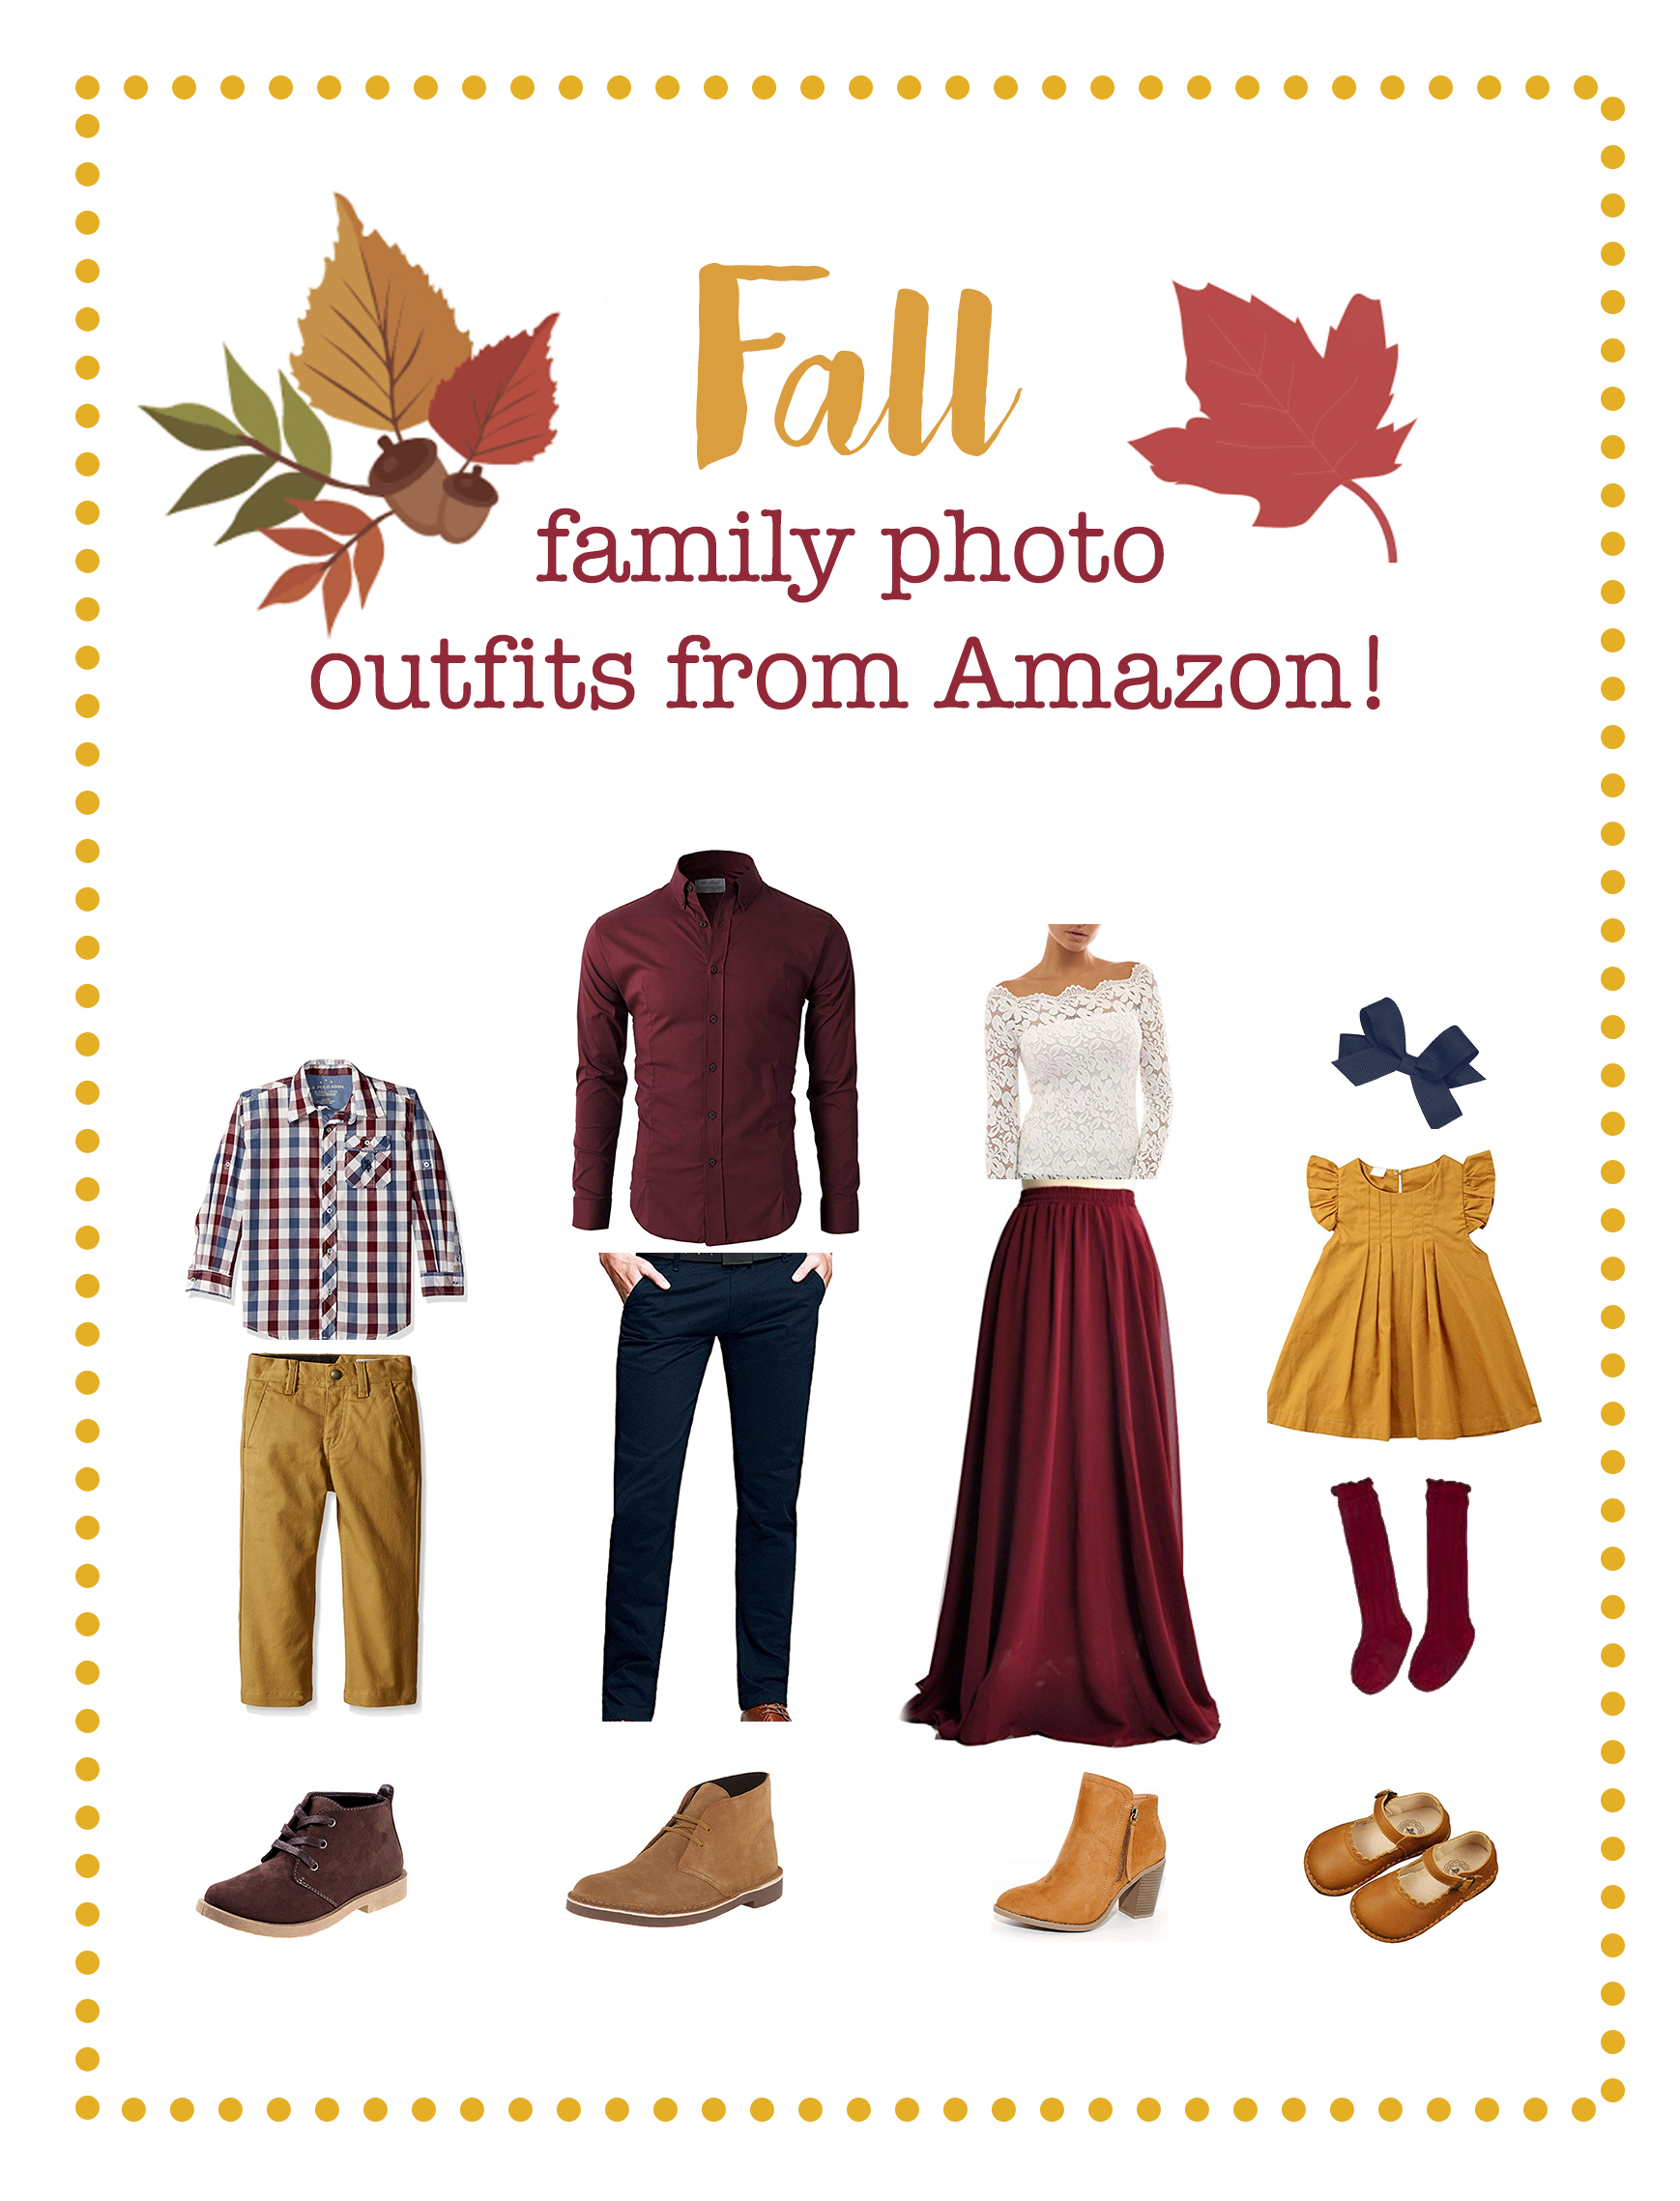 fall clothes amazon